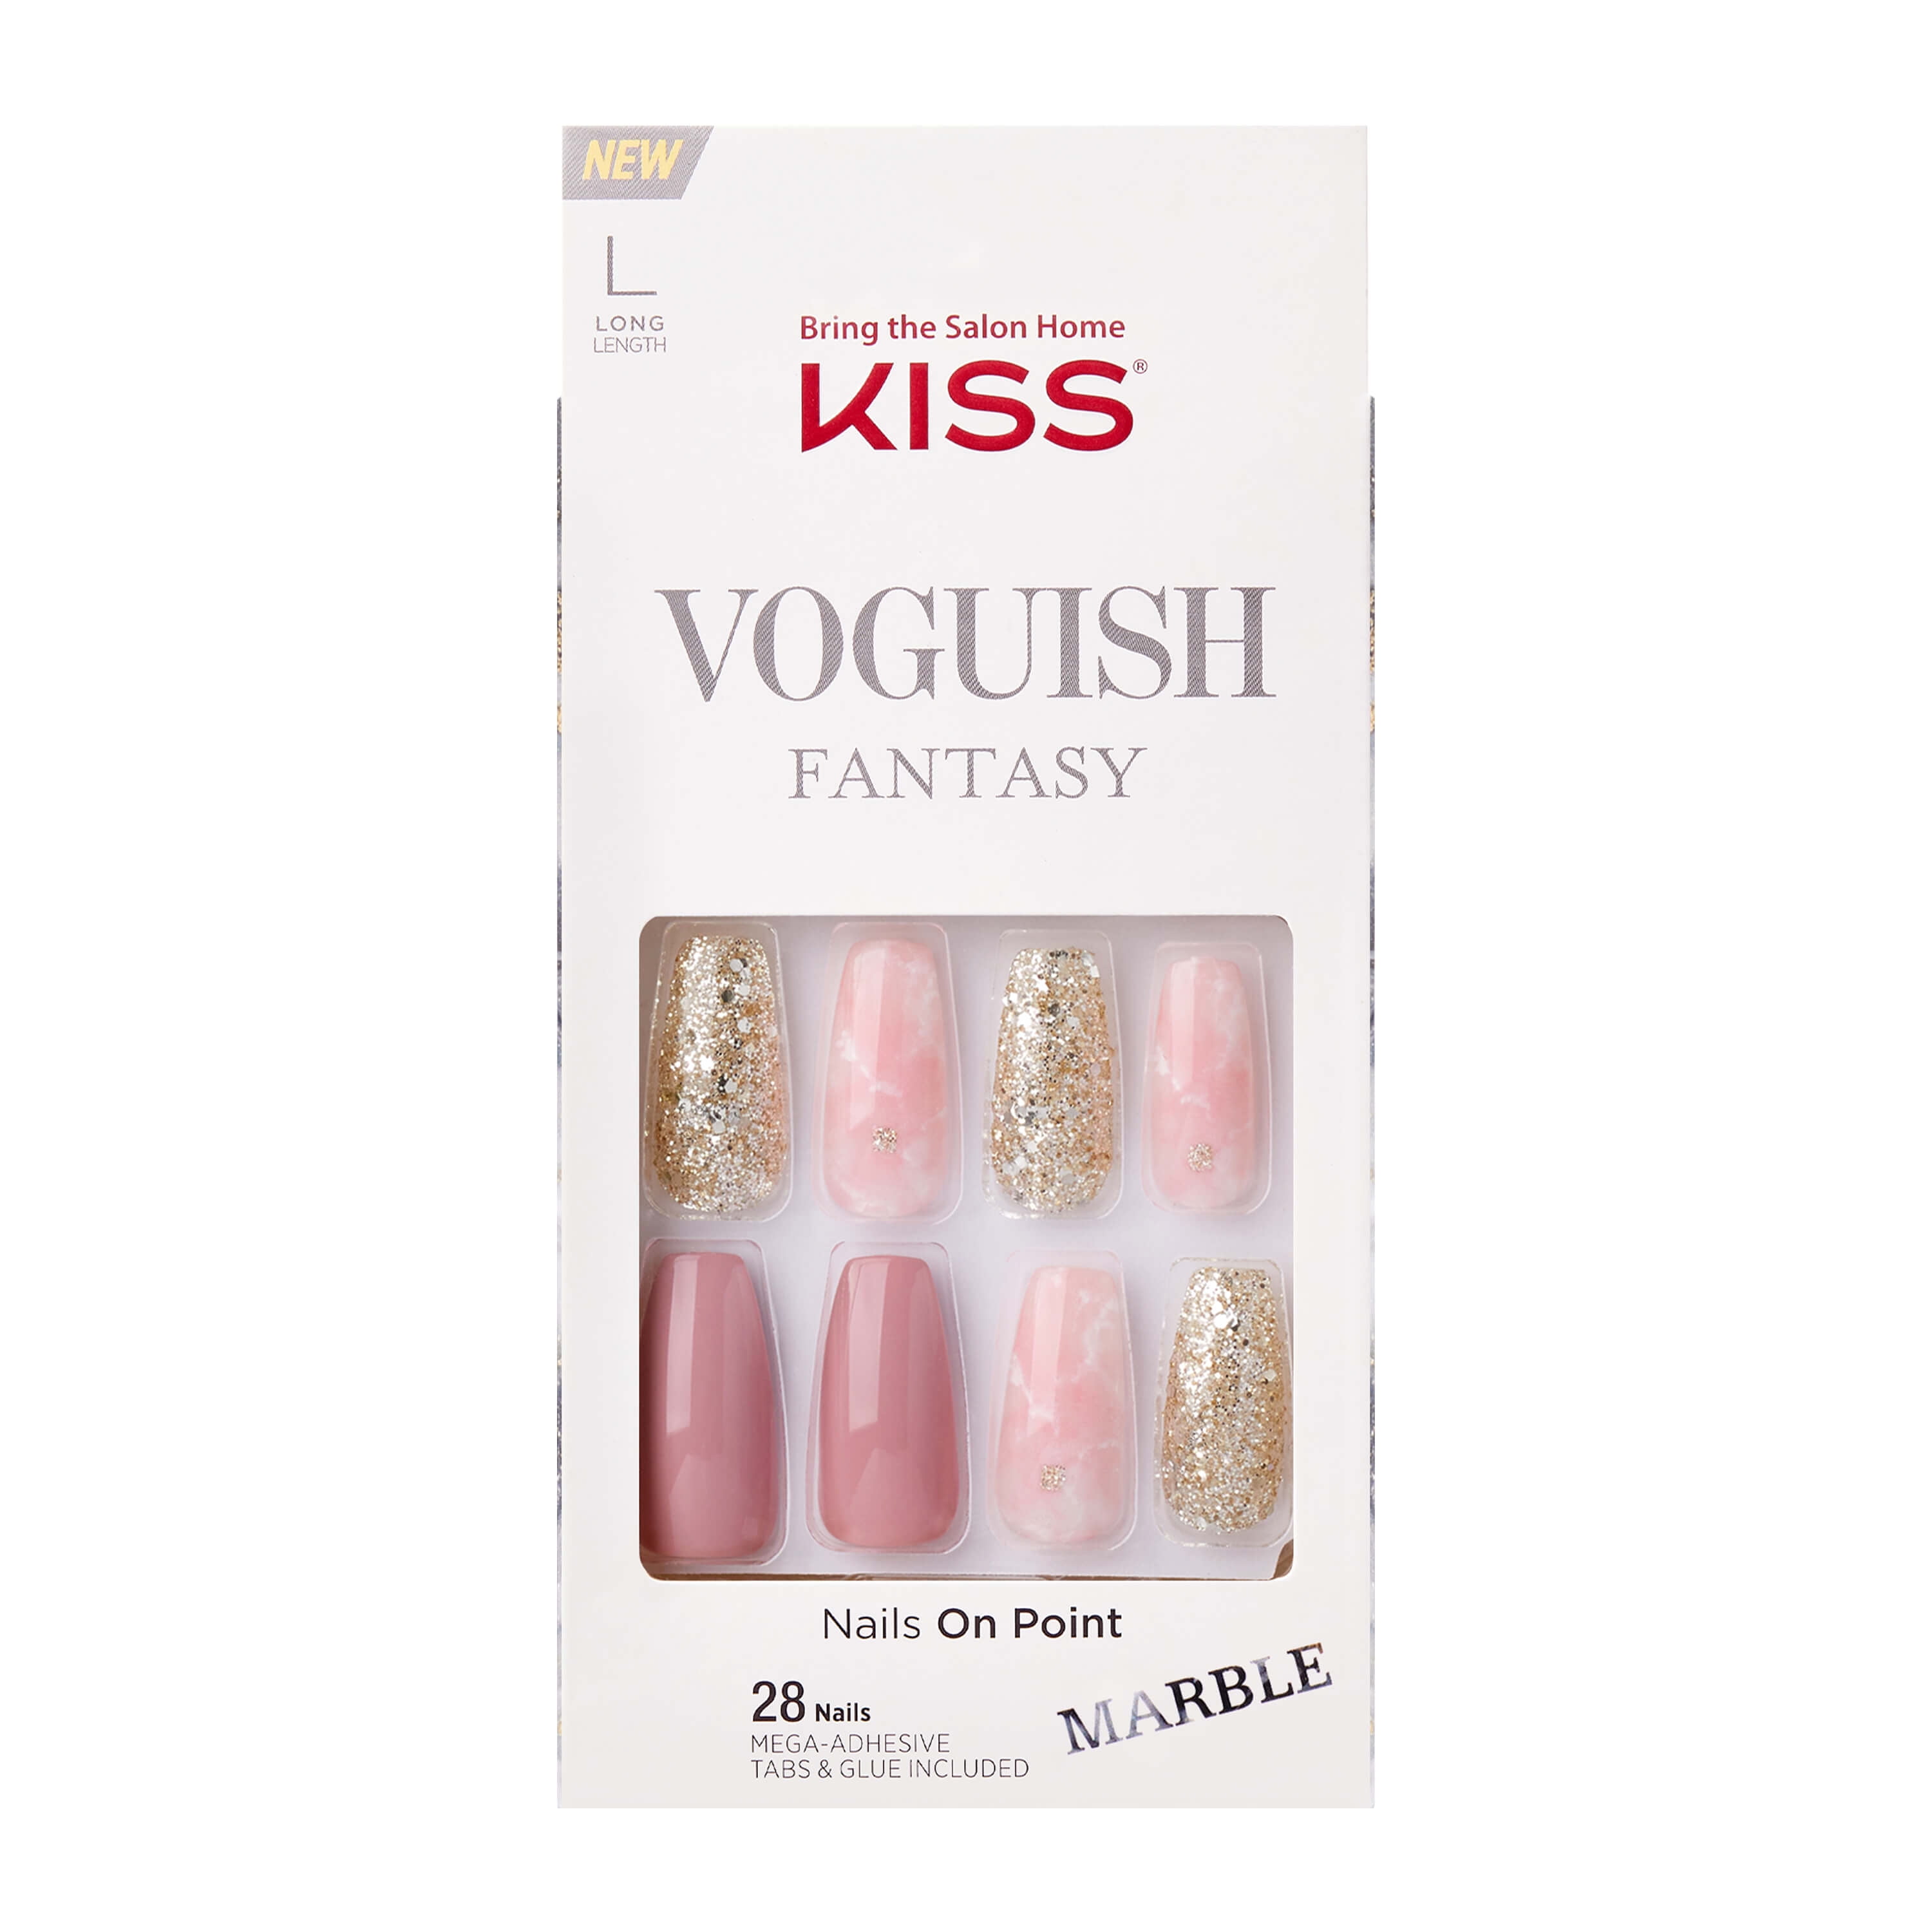 KISS Voguish Fantasy Nails - Online Shopper, Long 